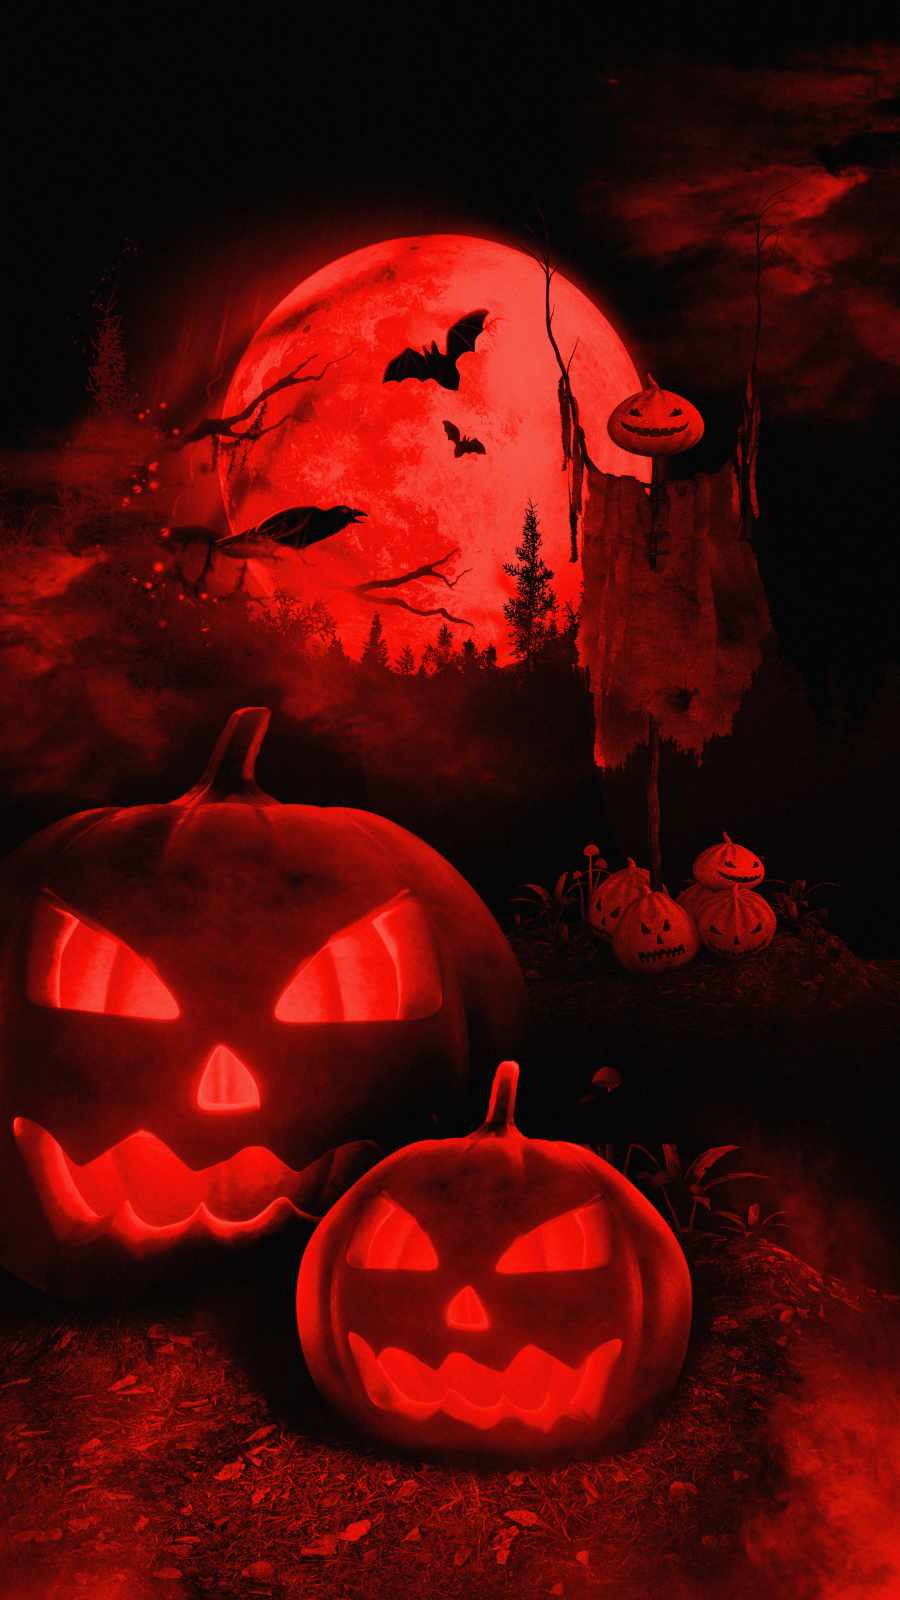 Scary Pumpkins Halloween IPhone Wallpaper Wallpaper, iPhone Wallpaper